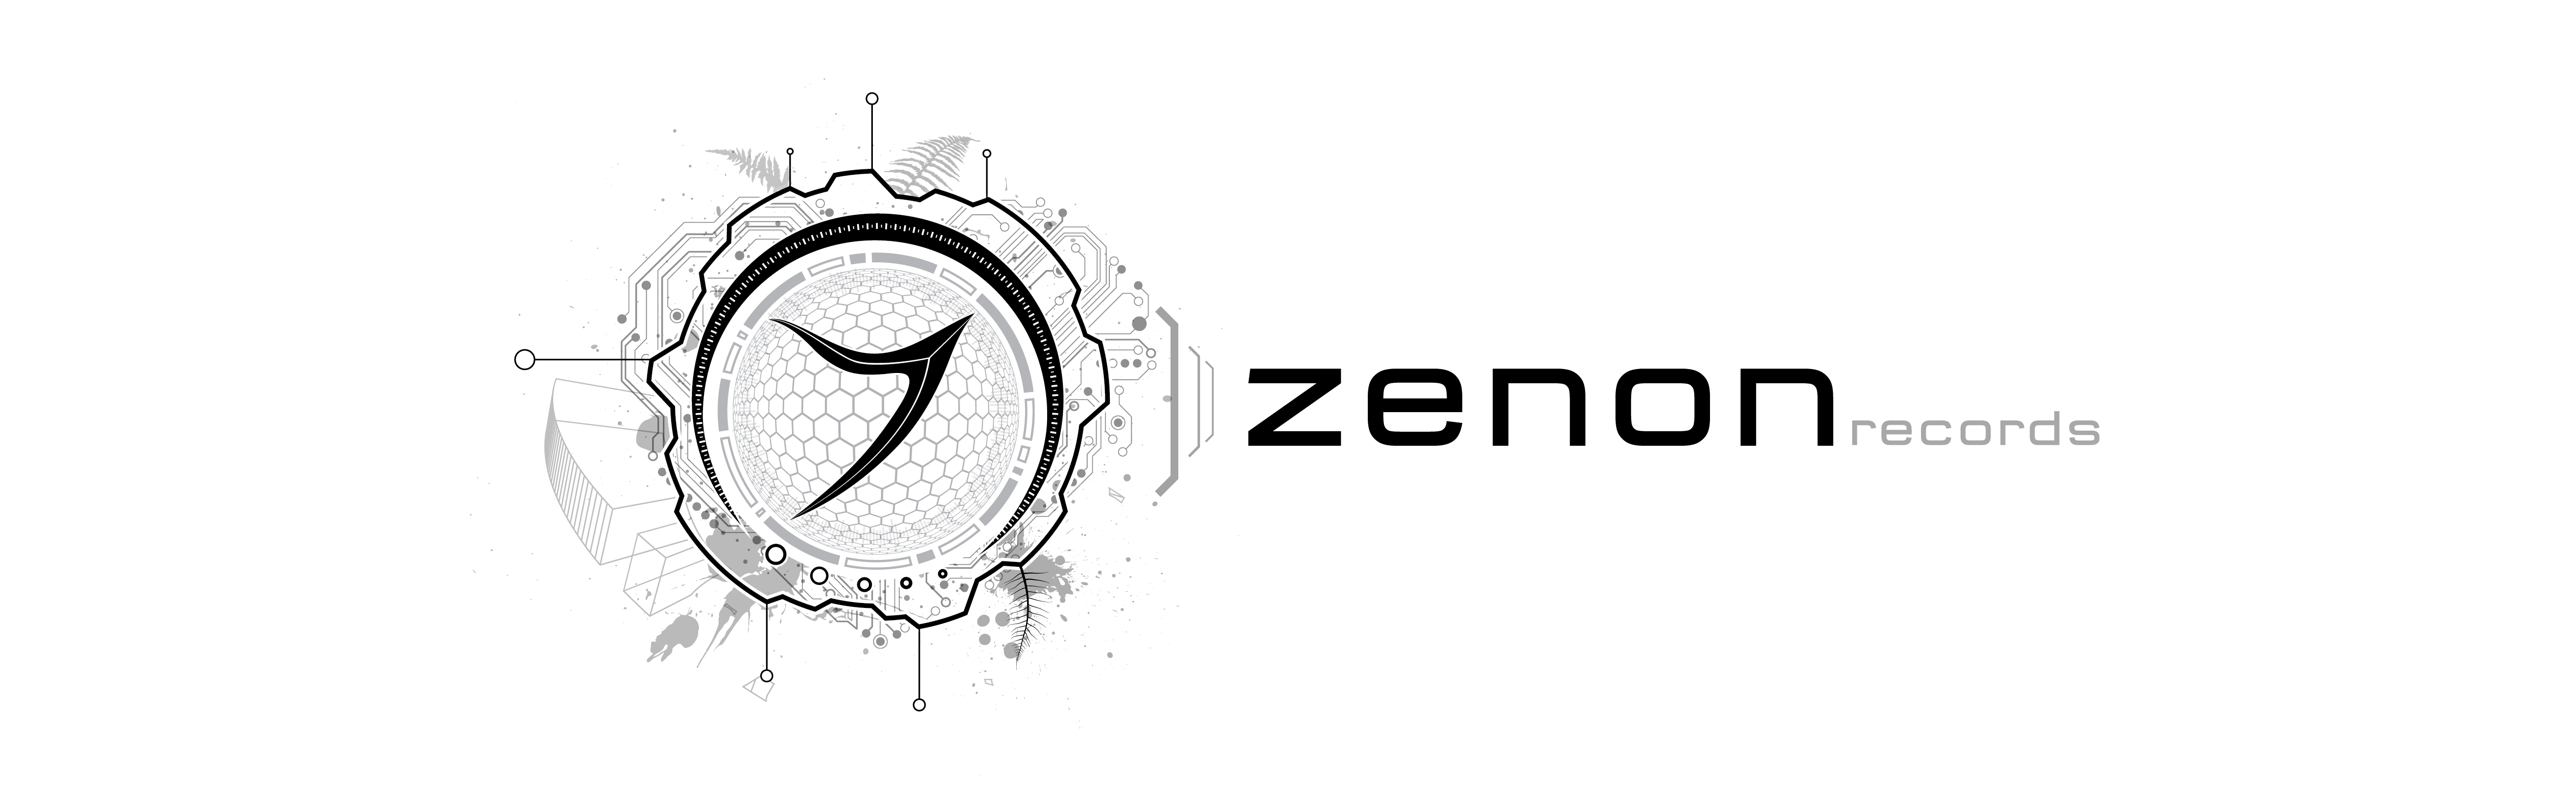 Zenon Records